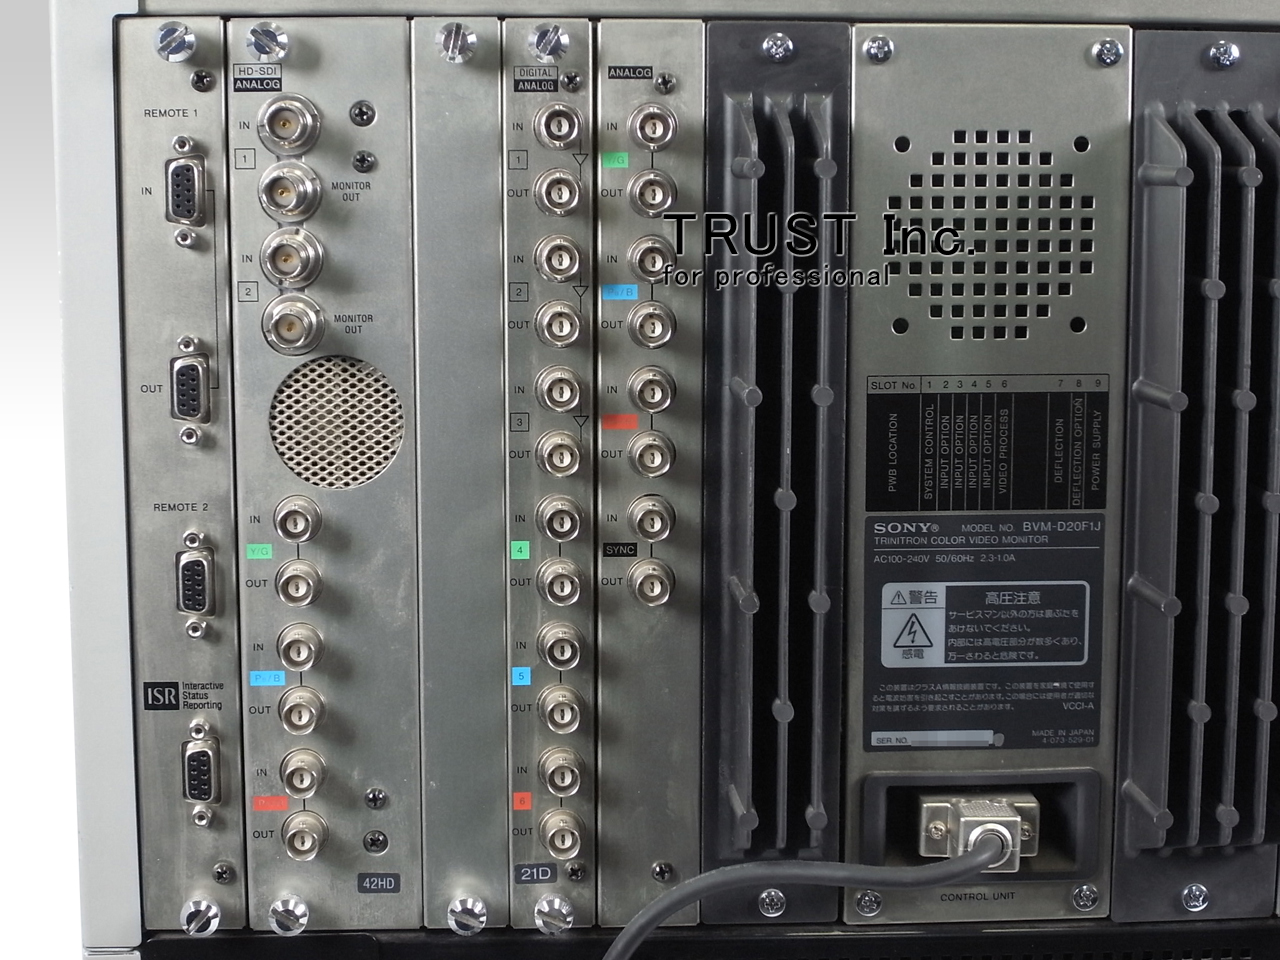 BVM-D20F1J / 20inch CRT Master Monitor【中古放送用・業務用 映像